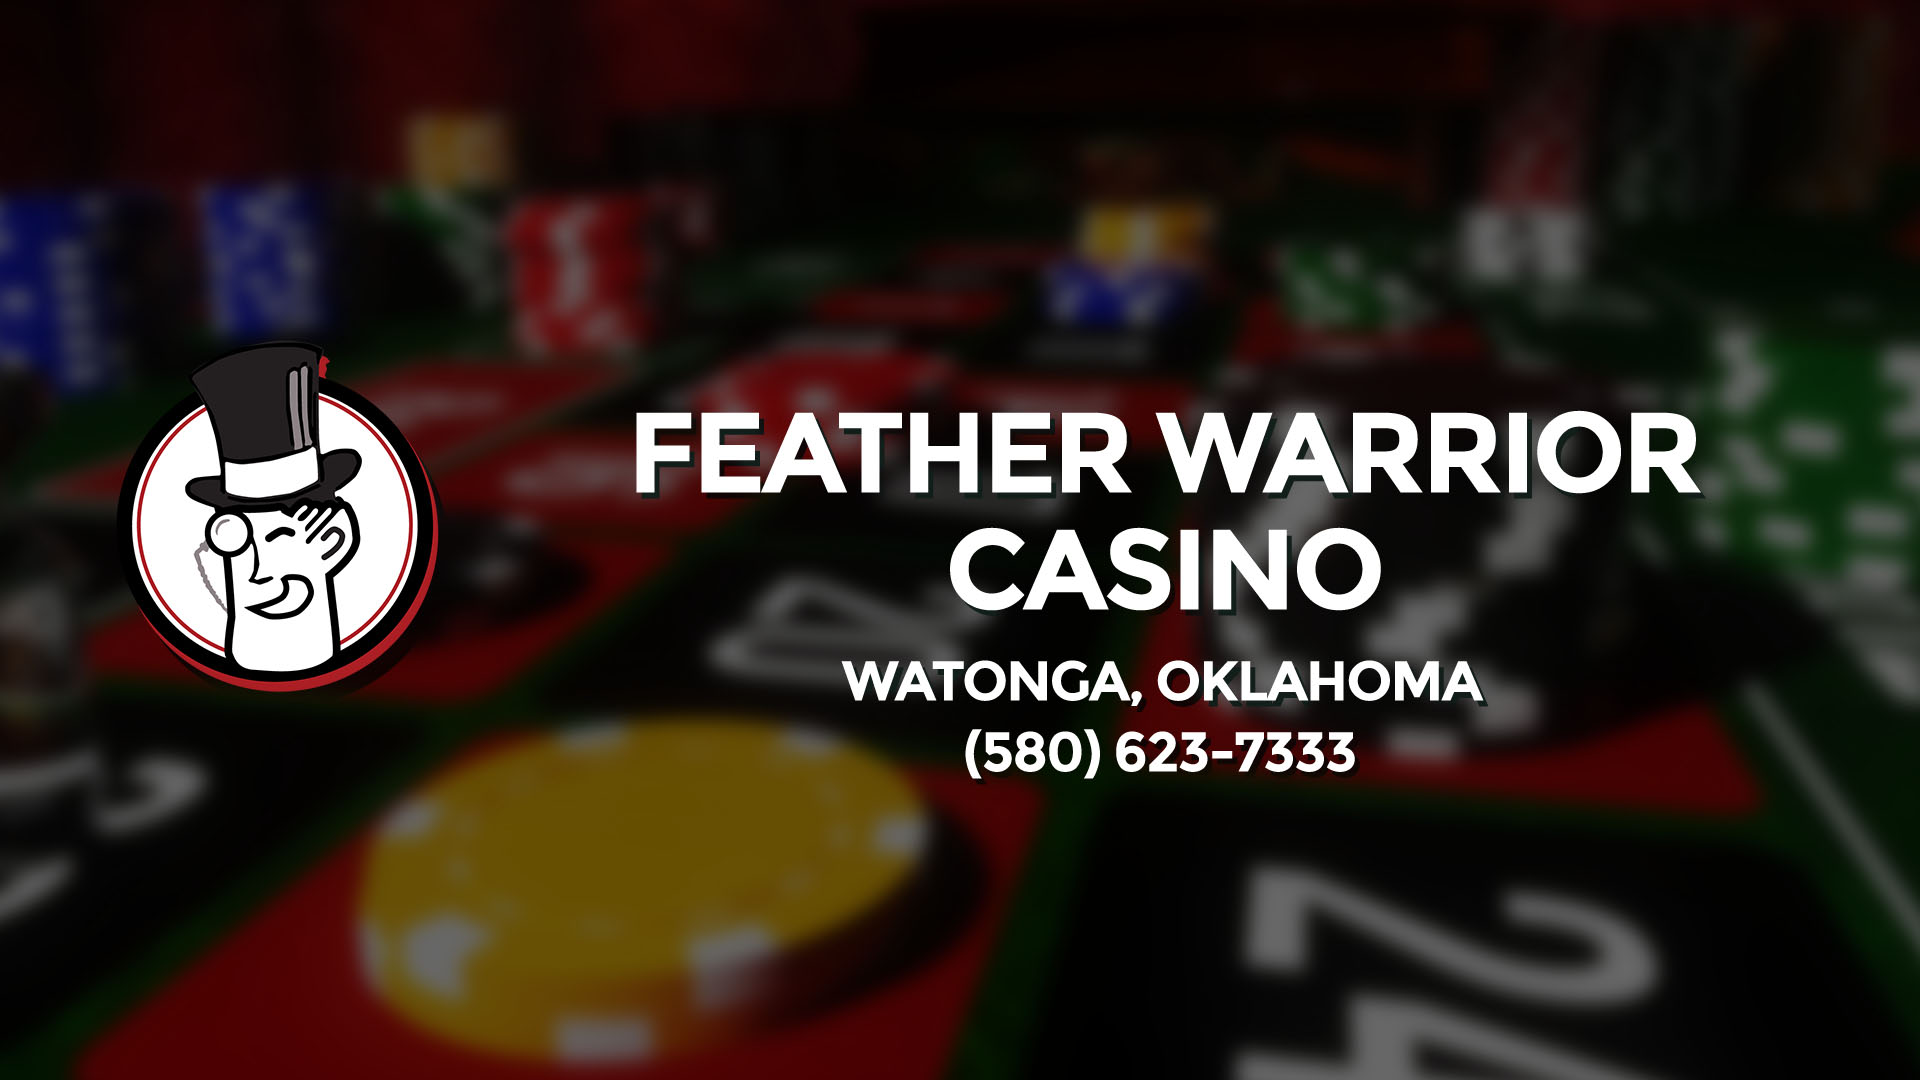 Feather warrior casino watonga ok